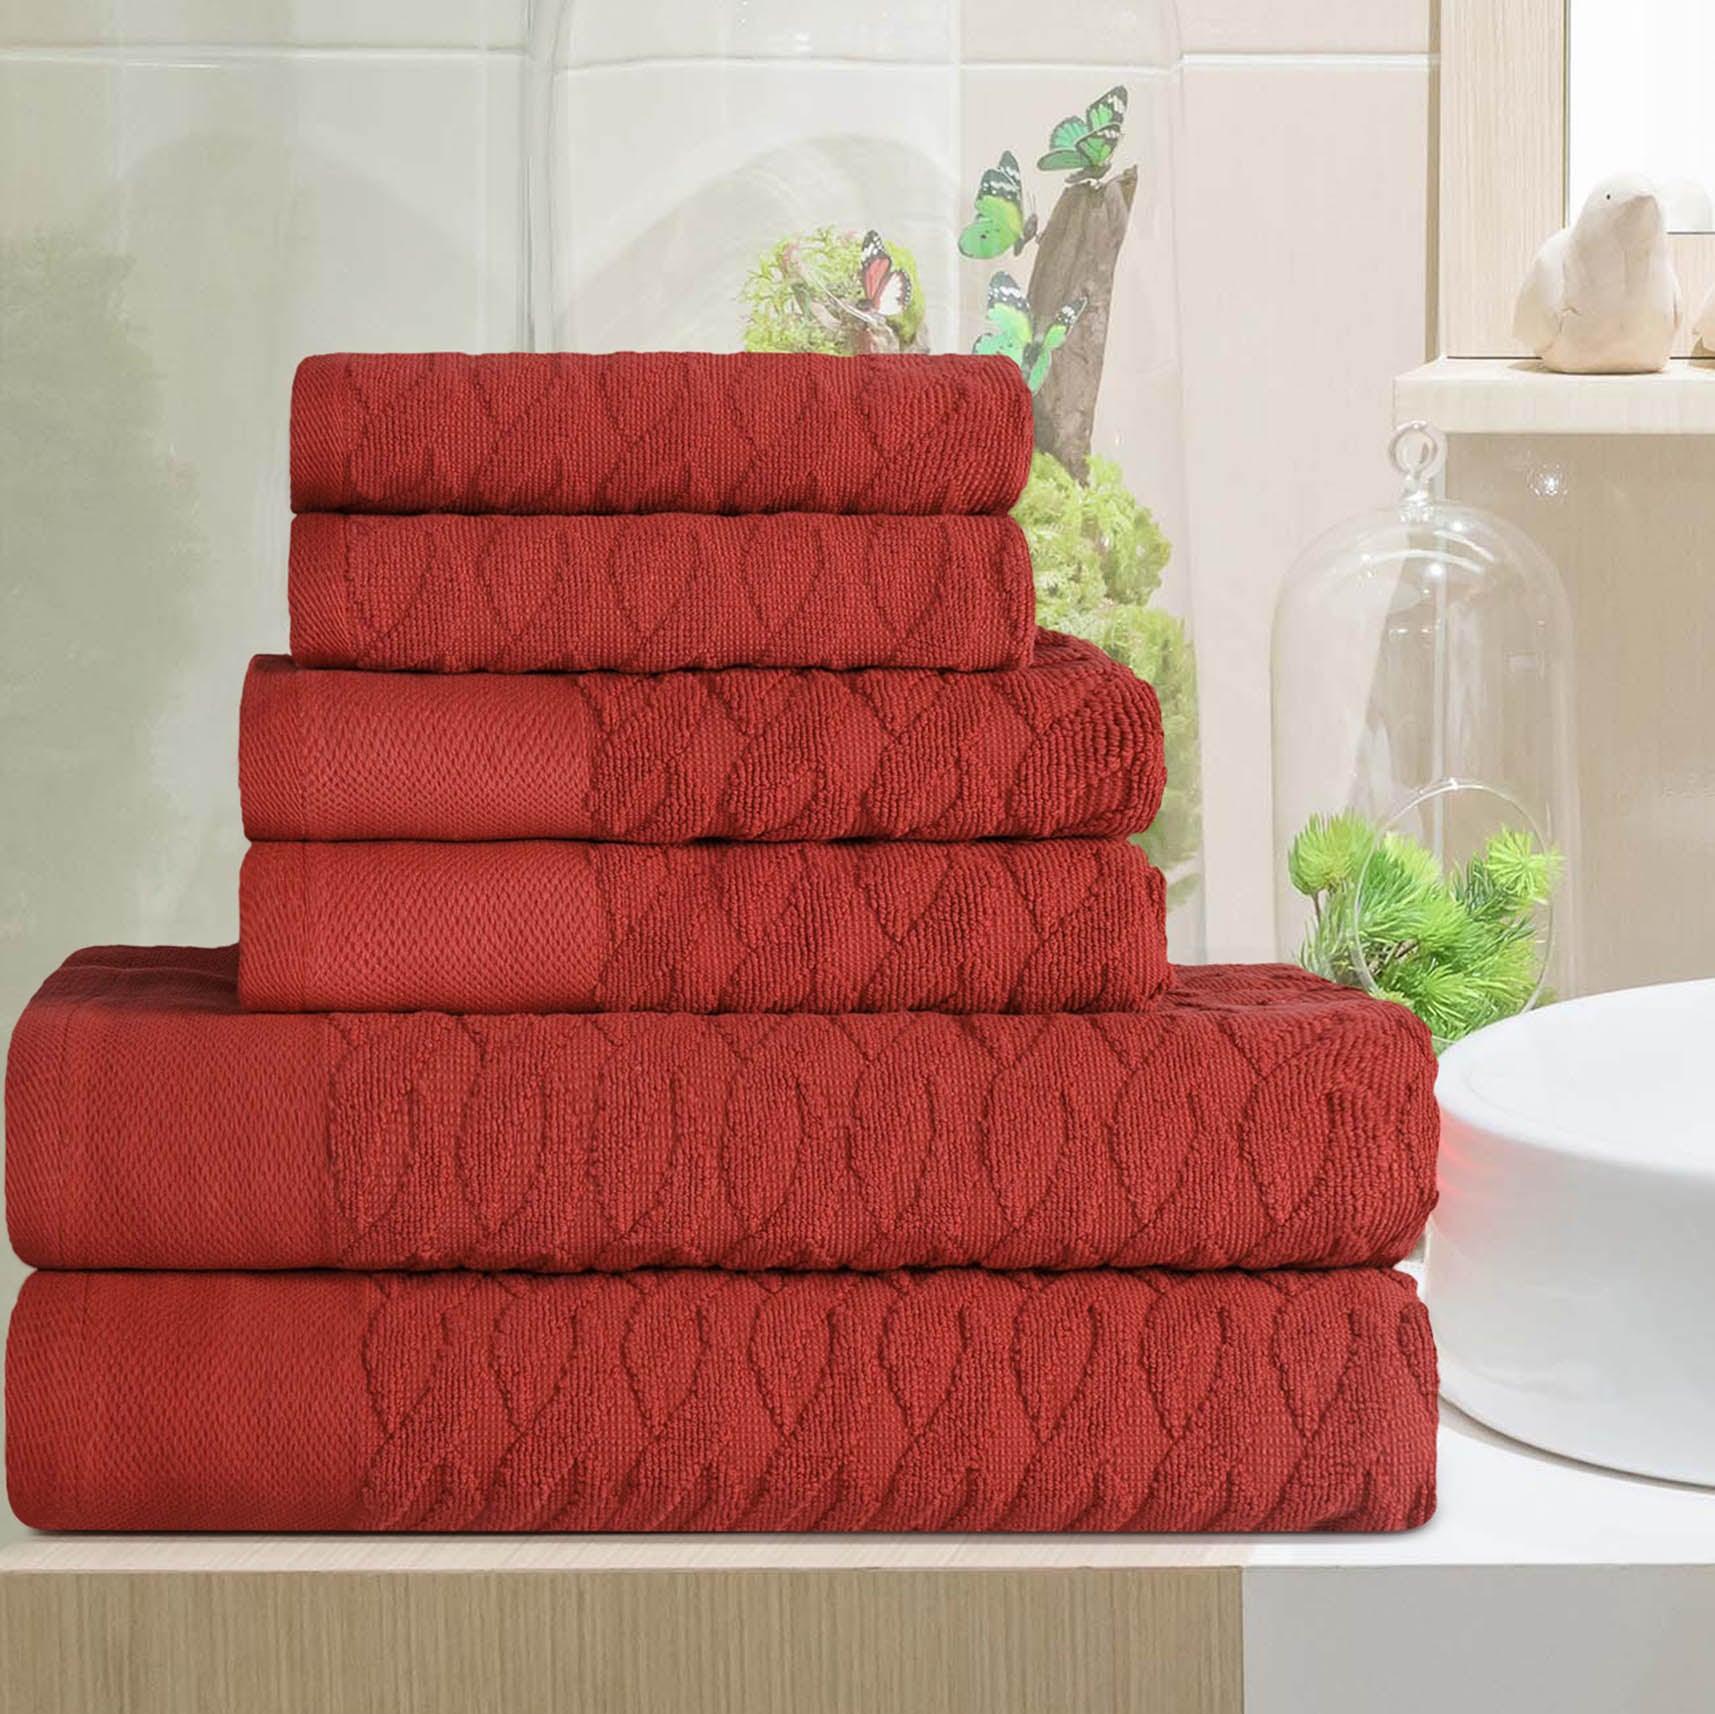 Premium Turkish Cotton Herringbone Jacquard Assorted 6-Piece Towel Set - Maroon